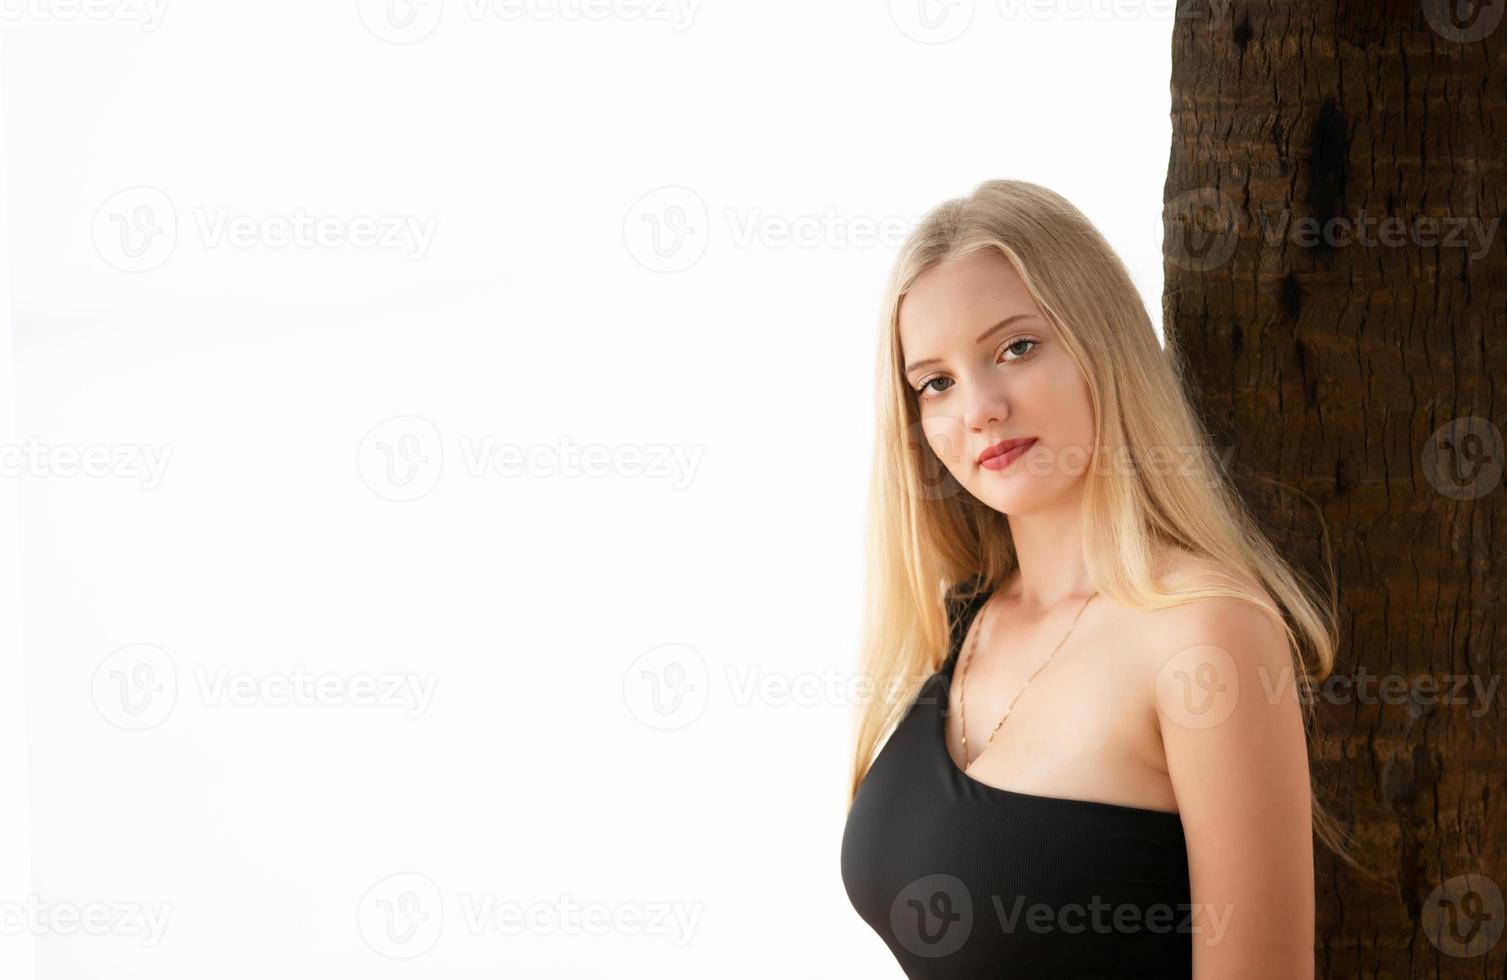 vacker blond kvinna på svart bikini njuta av sommaren på stranden. foto